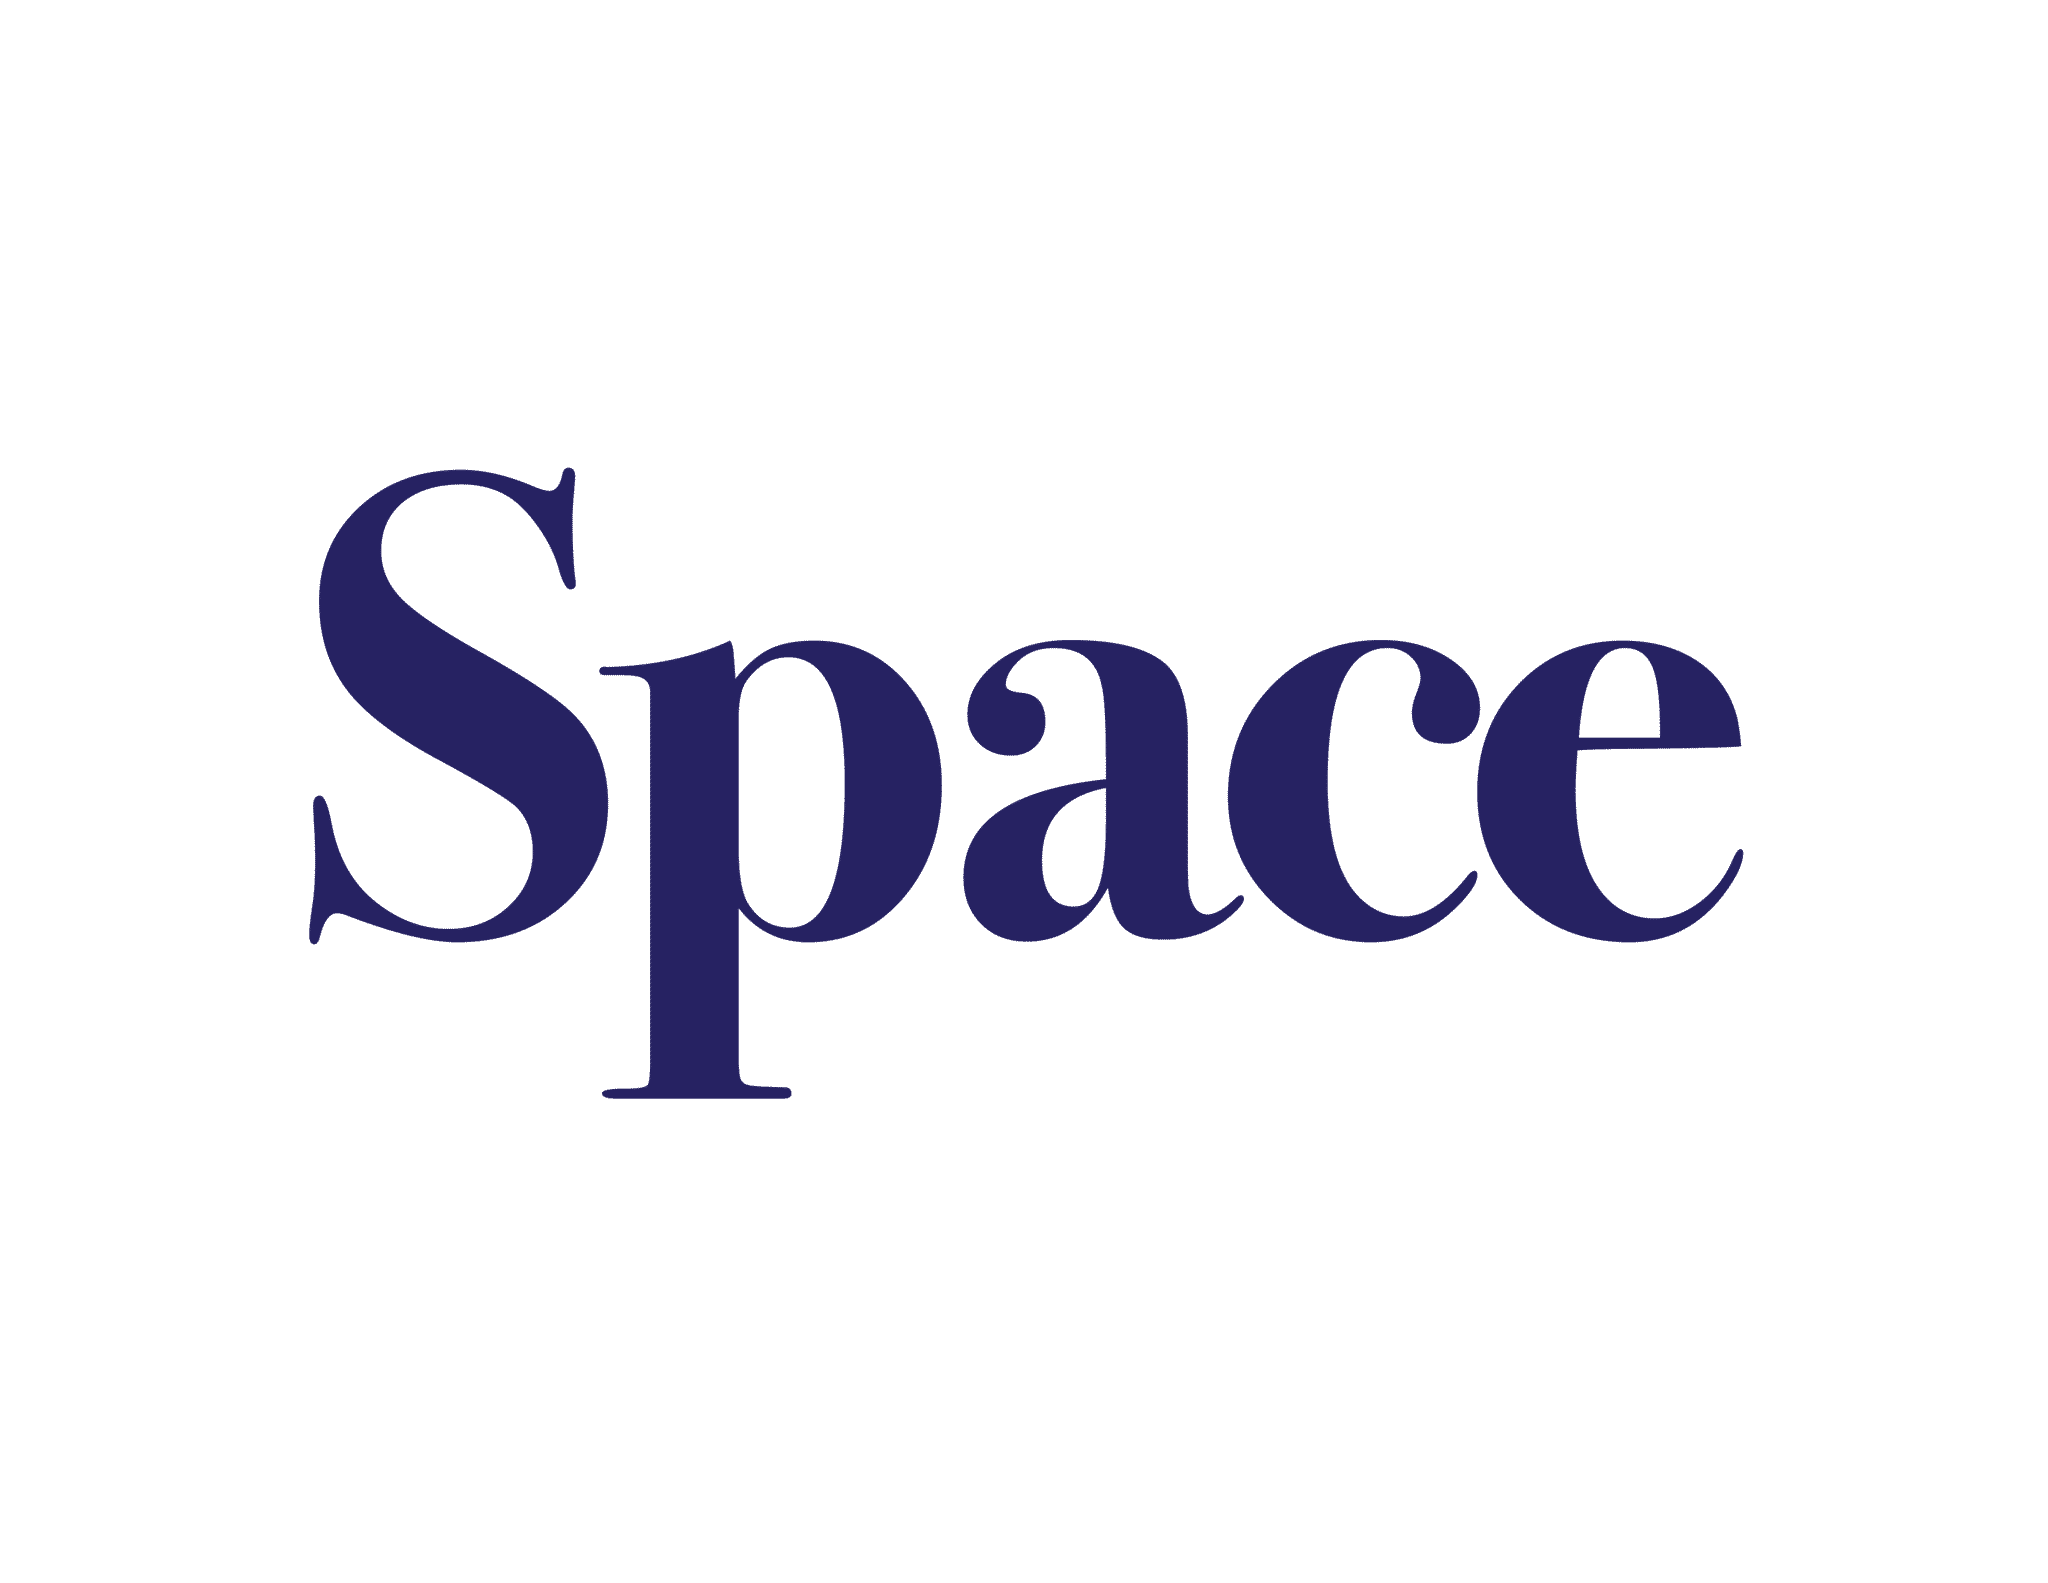 Iogames.space - Crunchbase Company Profile & Funding